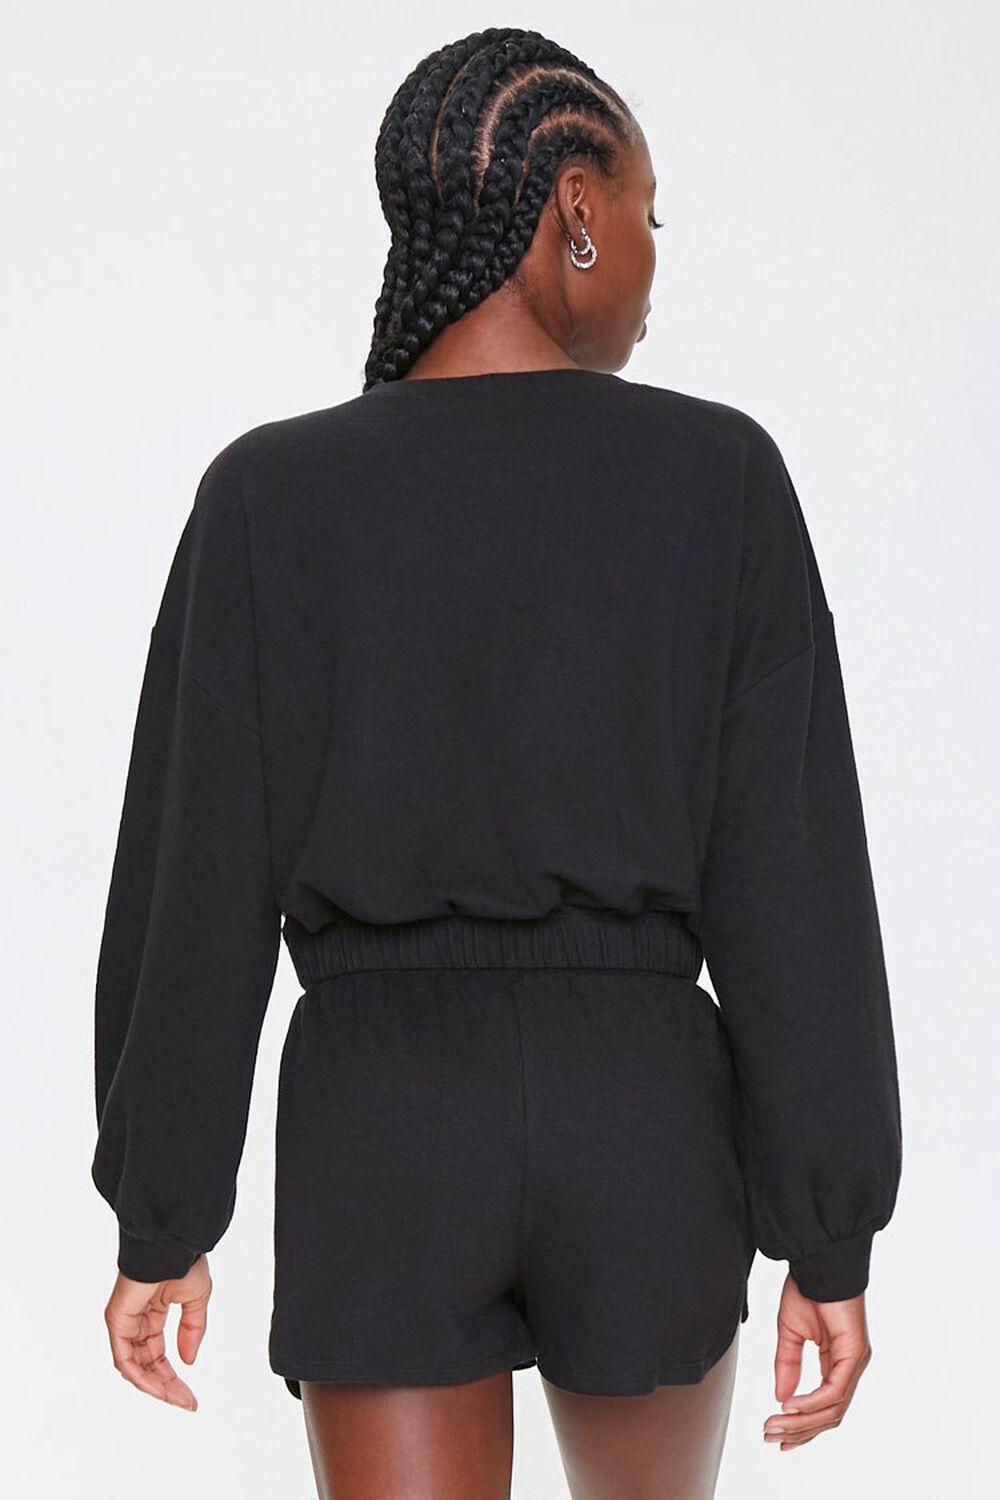 BLACK Drop-Sleeve Top & Drawstring Shorts Set, image 3